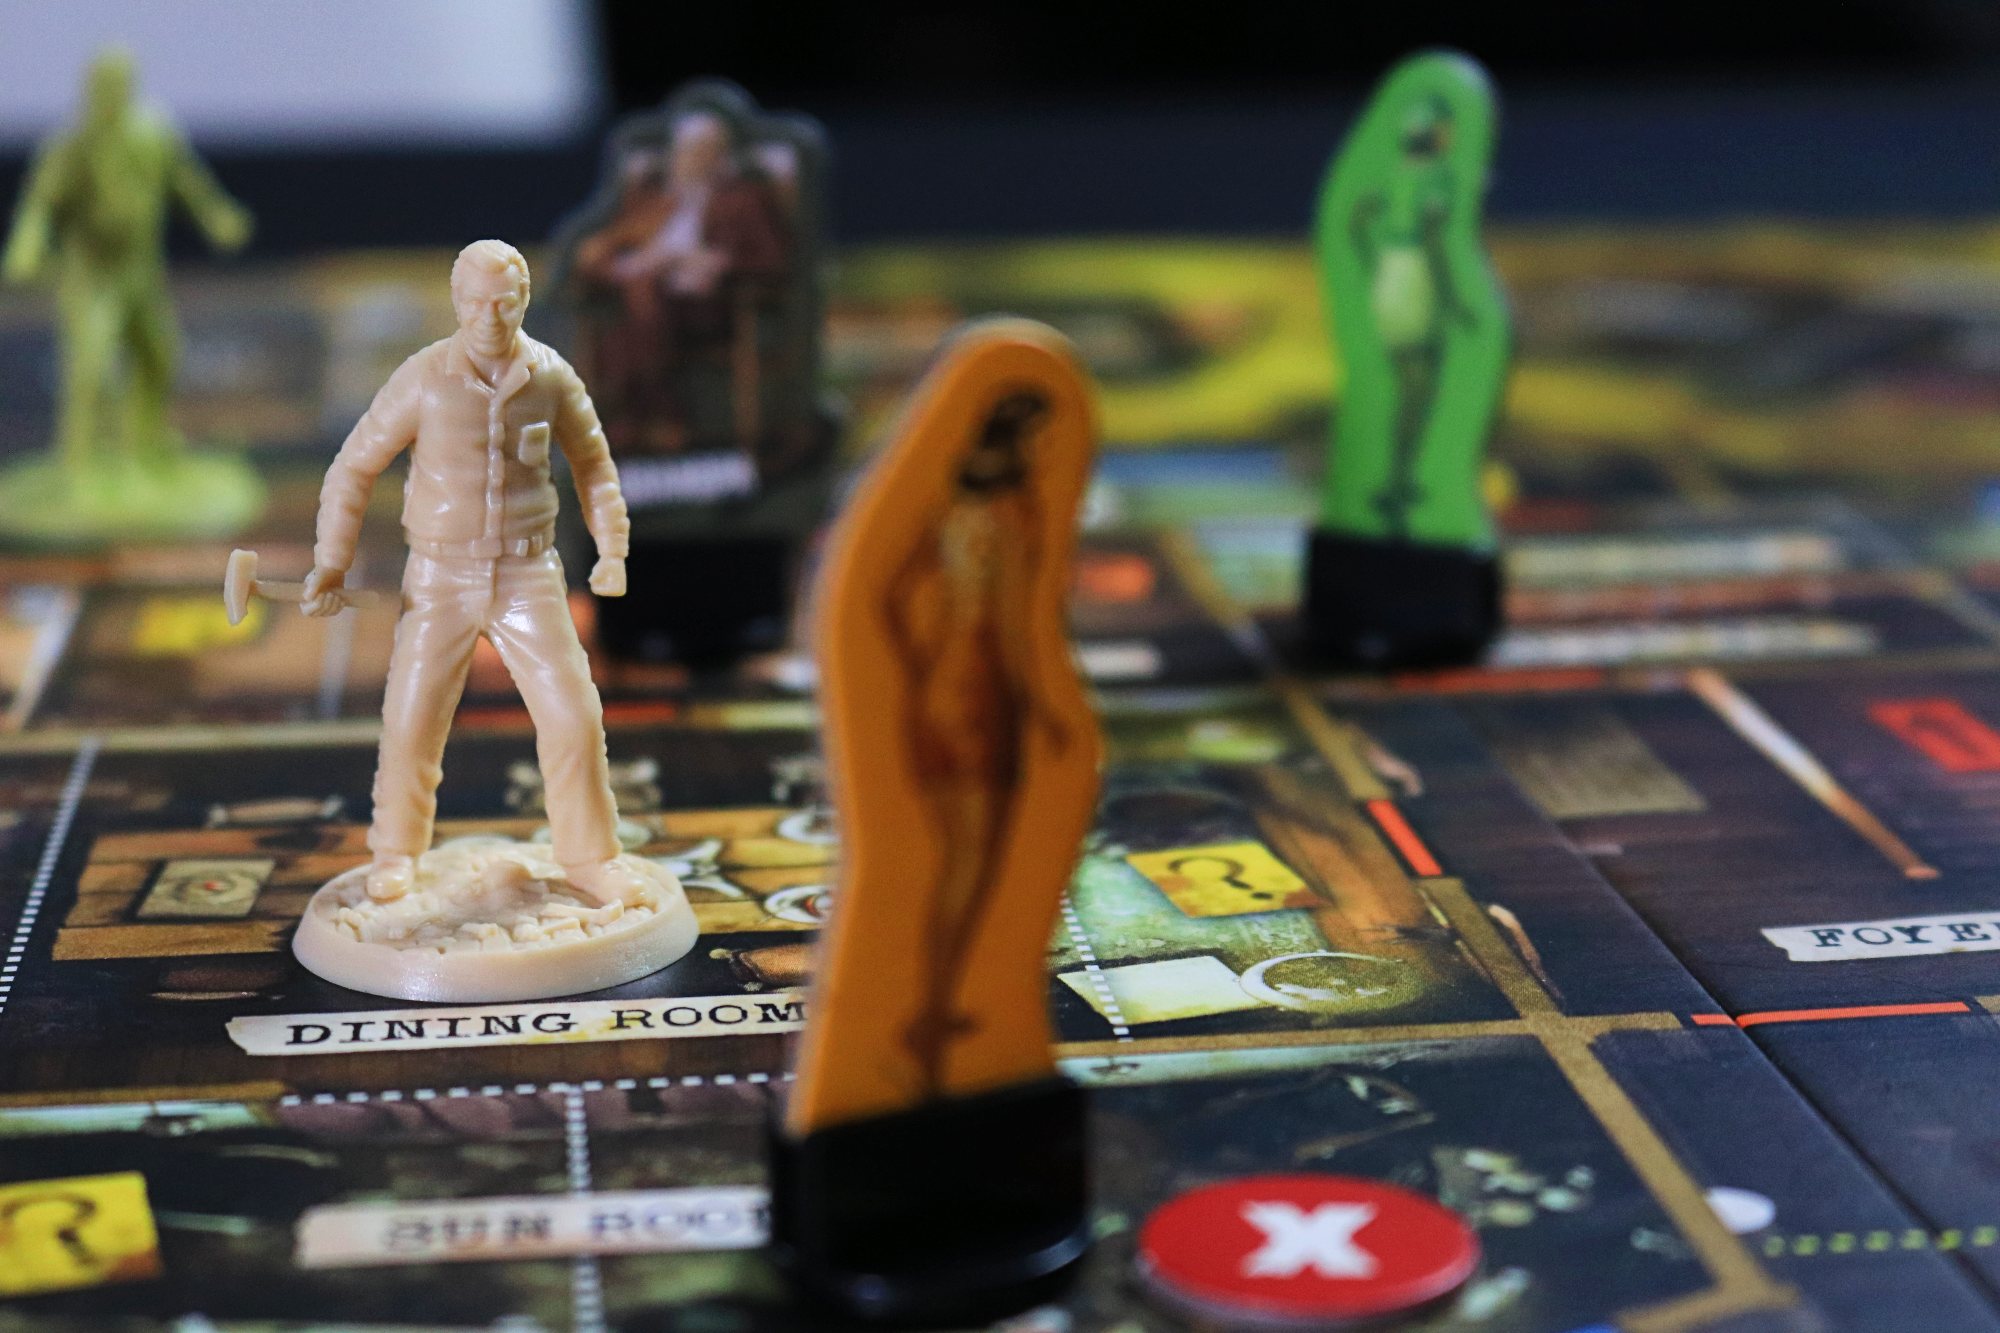 The Texas Chainsaw Massacre Board Game, Board Game